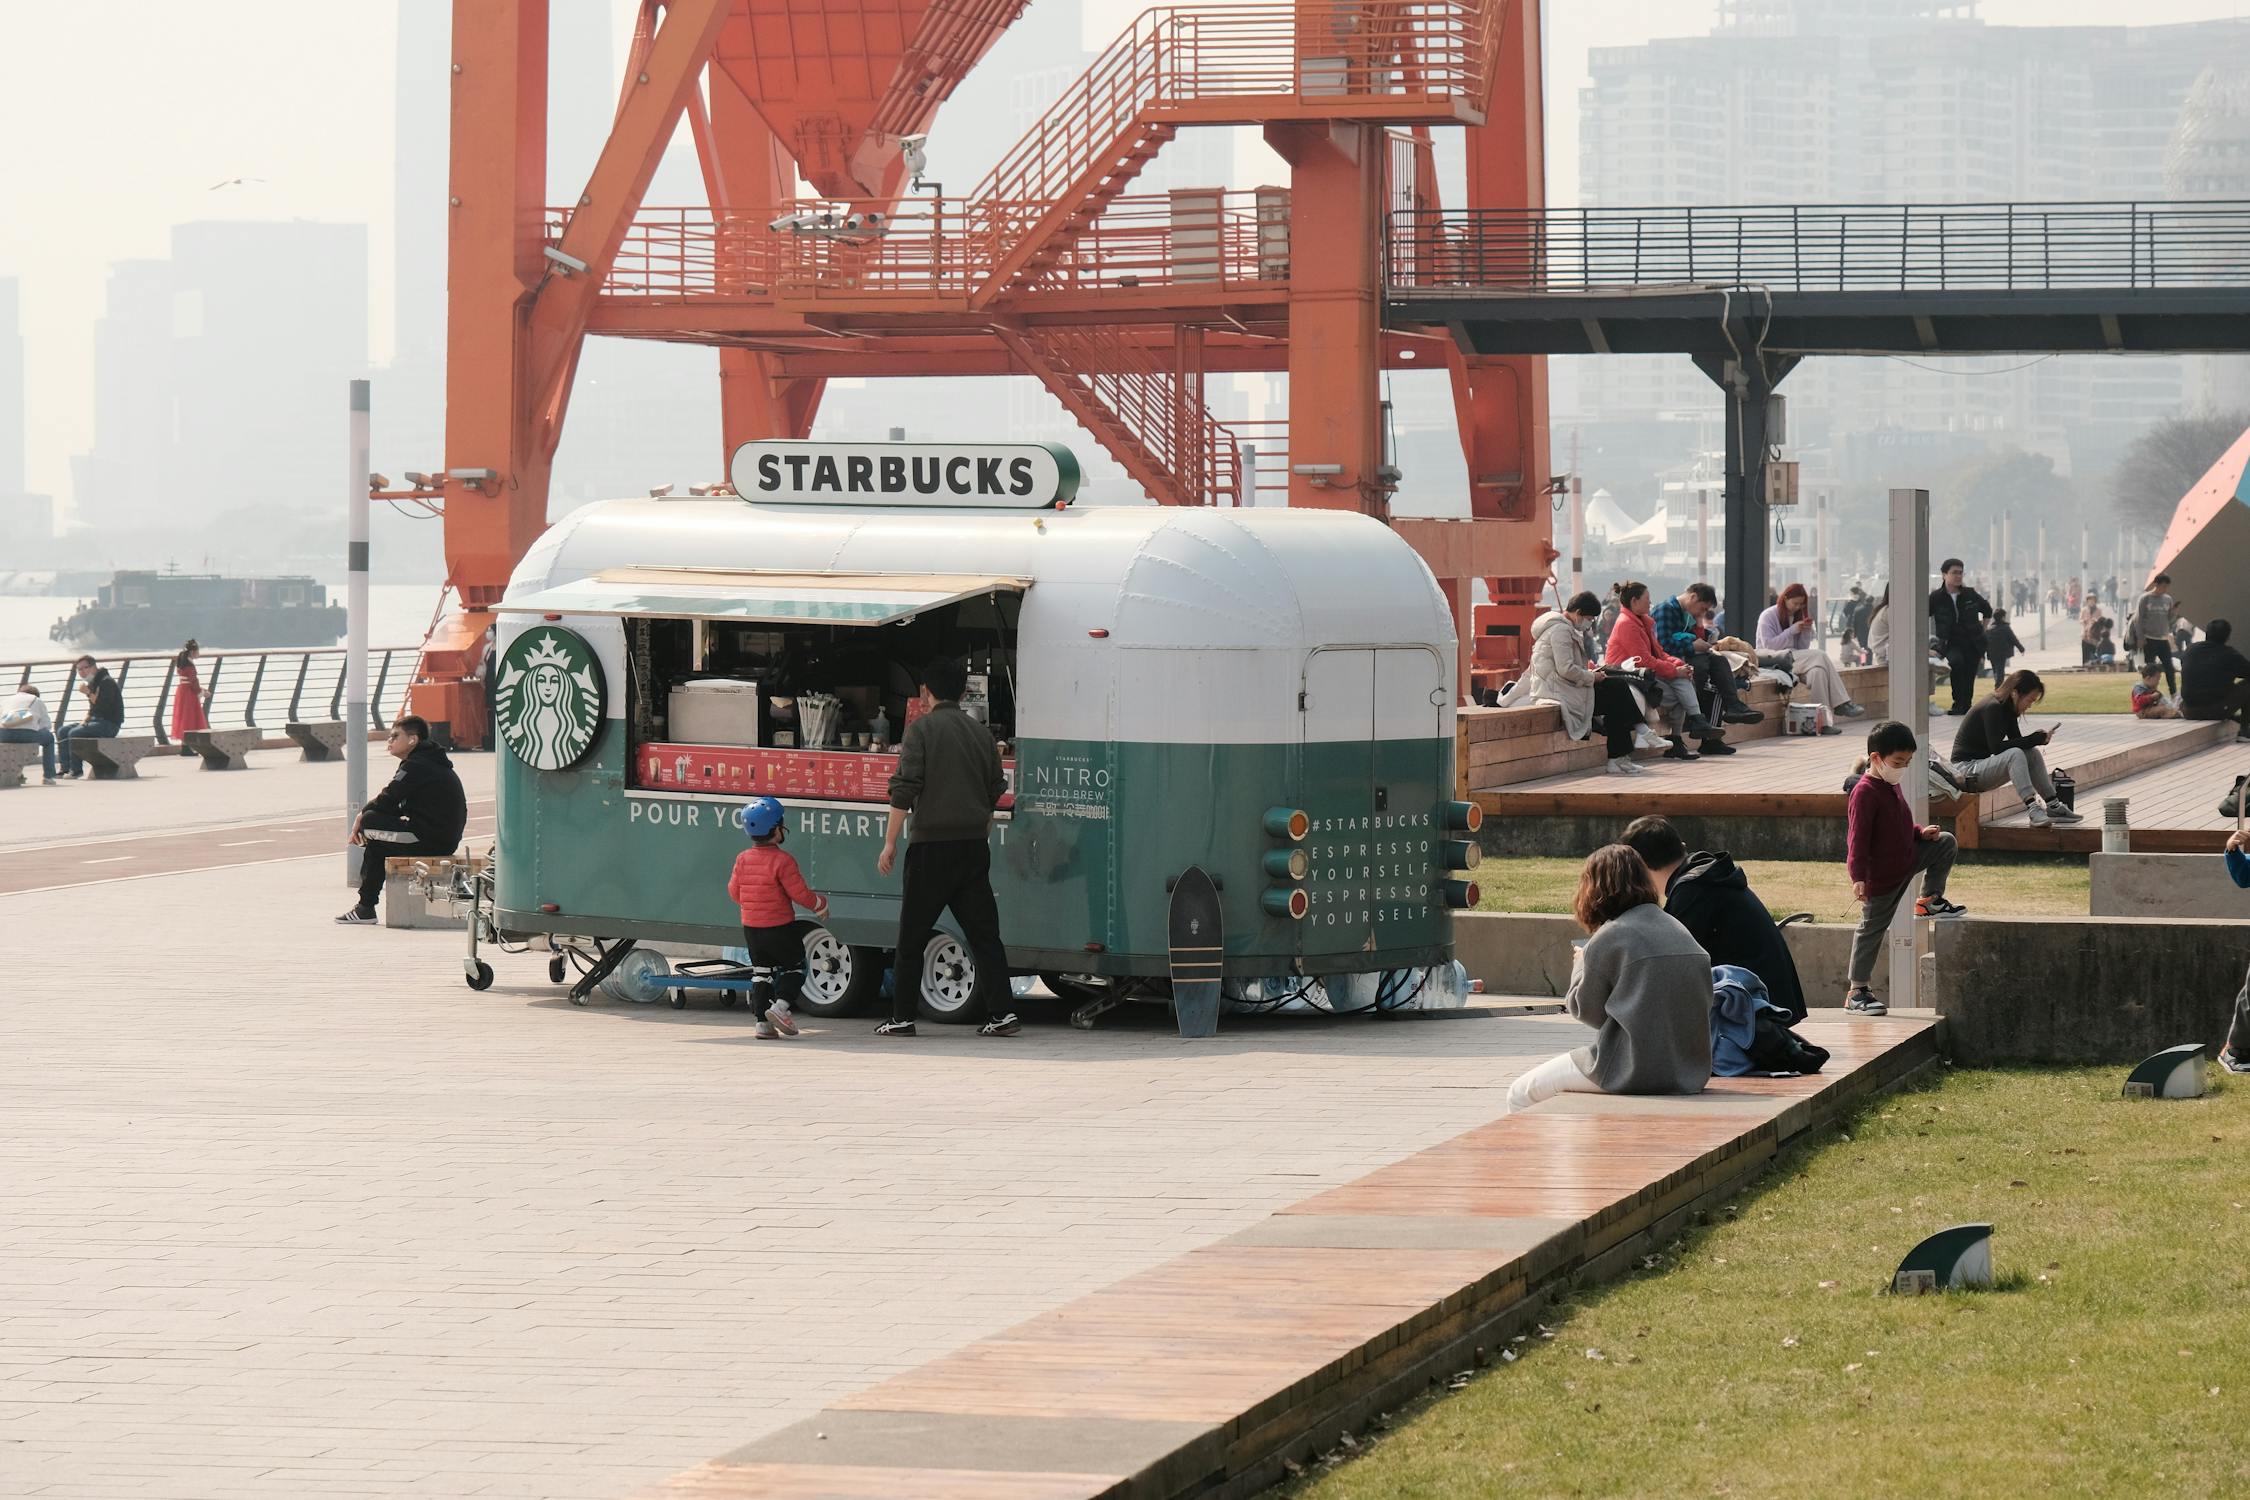 Starbucks mobile Coffee Truck on a City Promenade